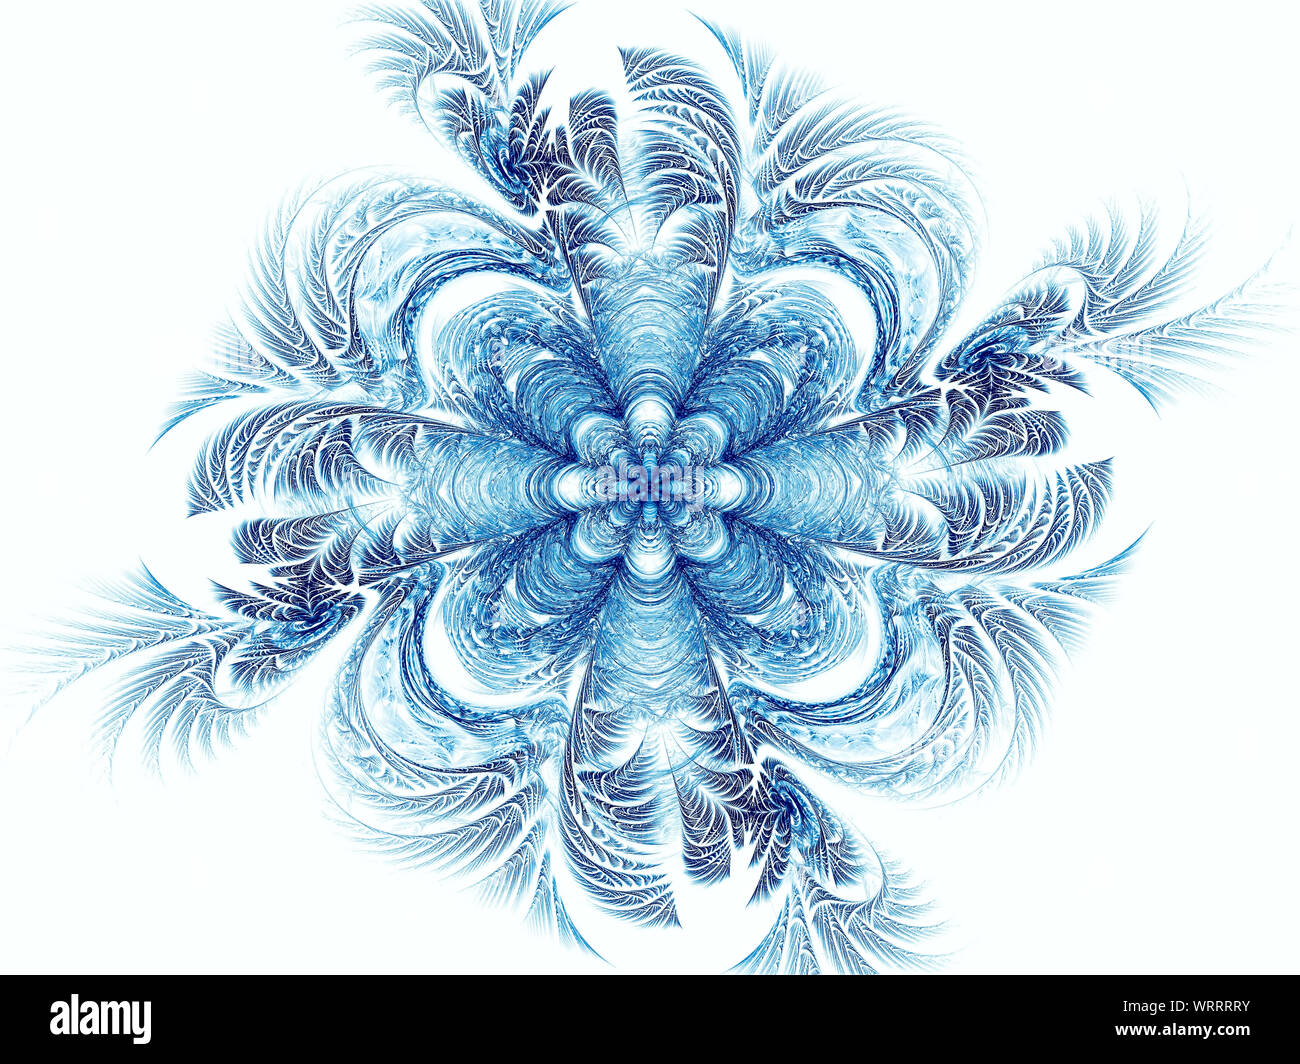 Abstract mandala or flower - digitally generated image Stock Photo